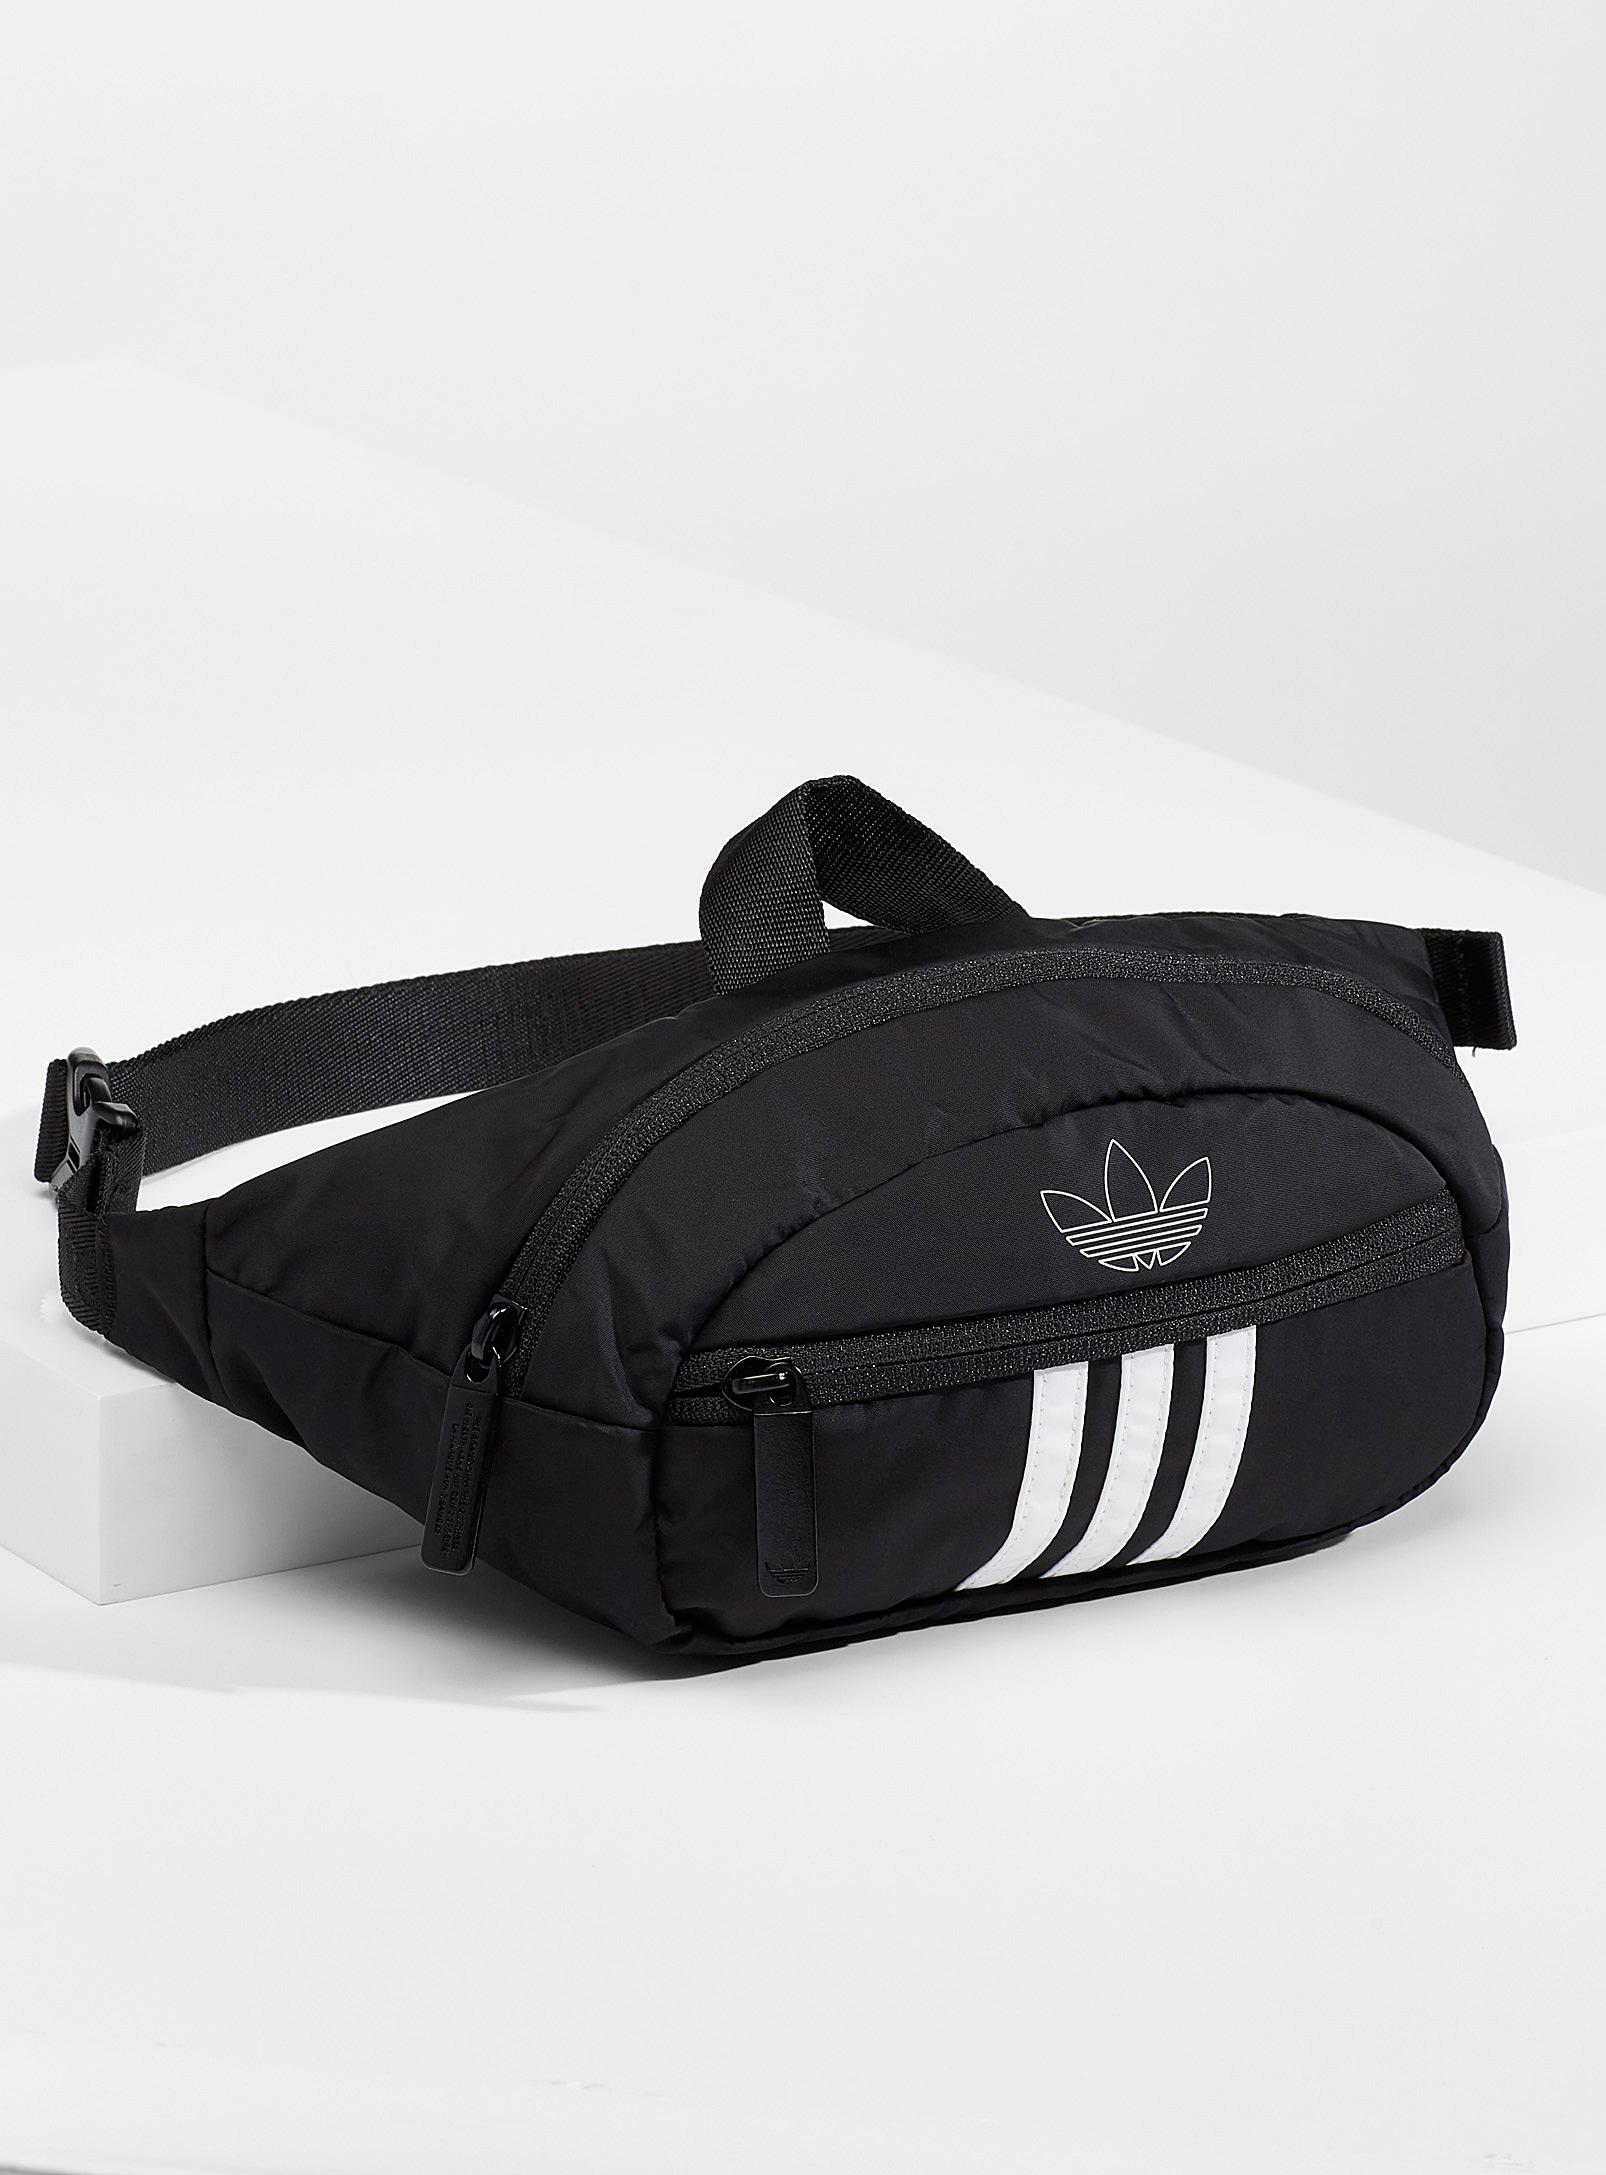 adidas Originals Iconic Stripe Belt Bag in Black for Men - Lyst